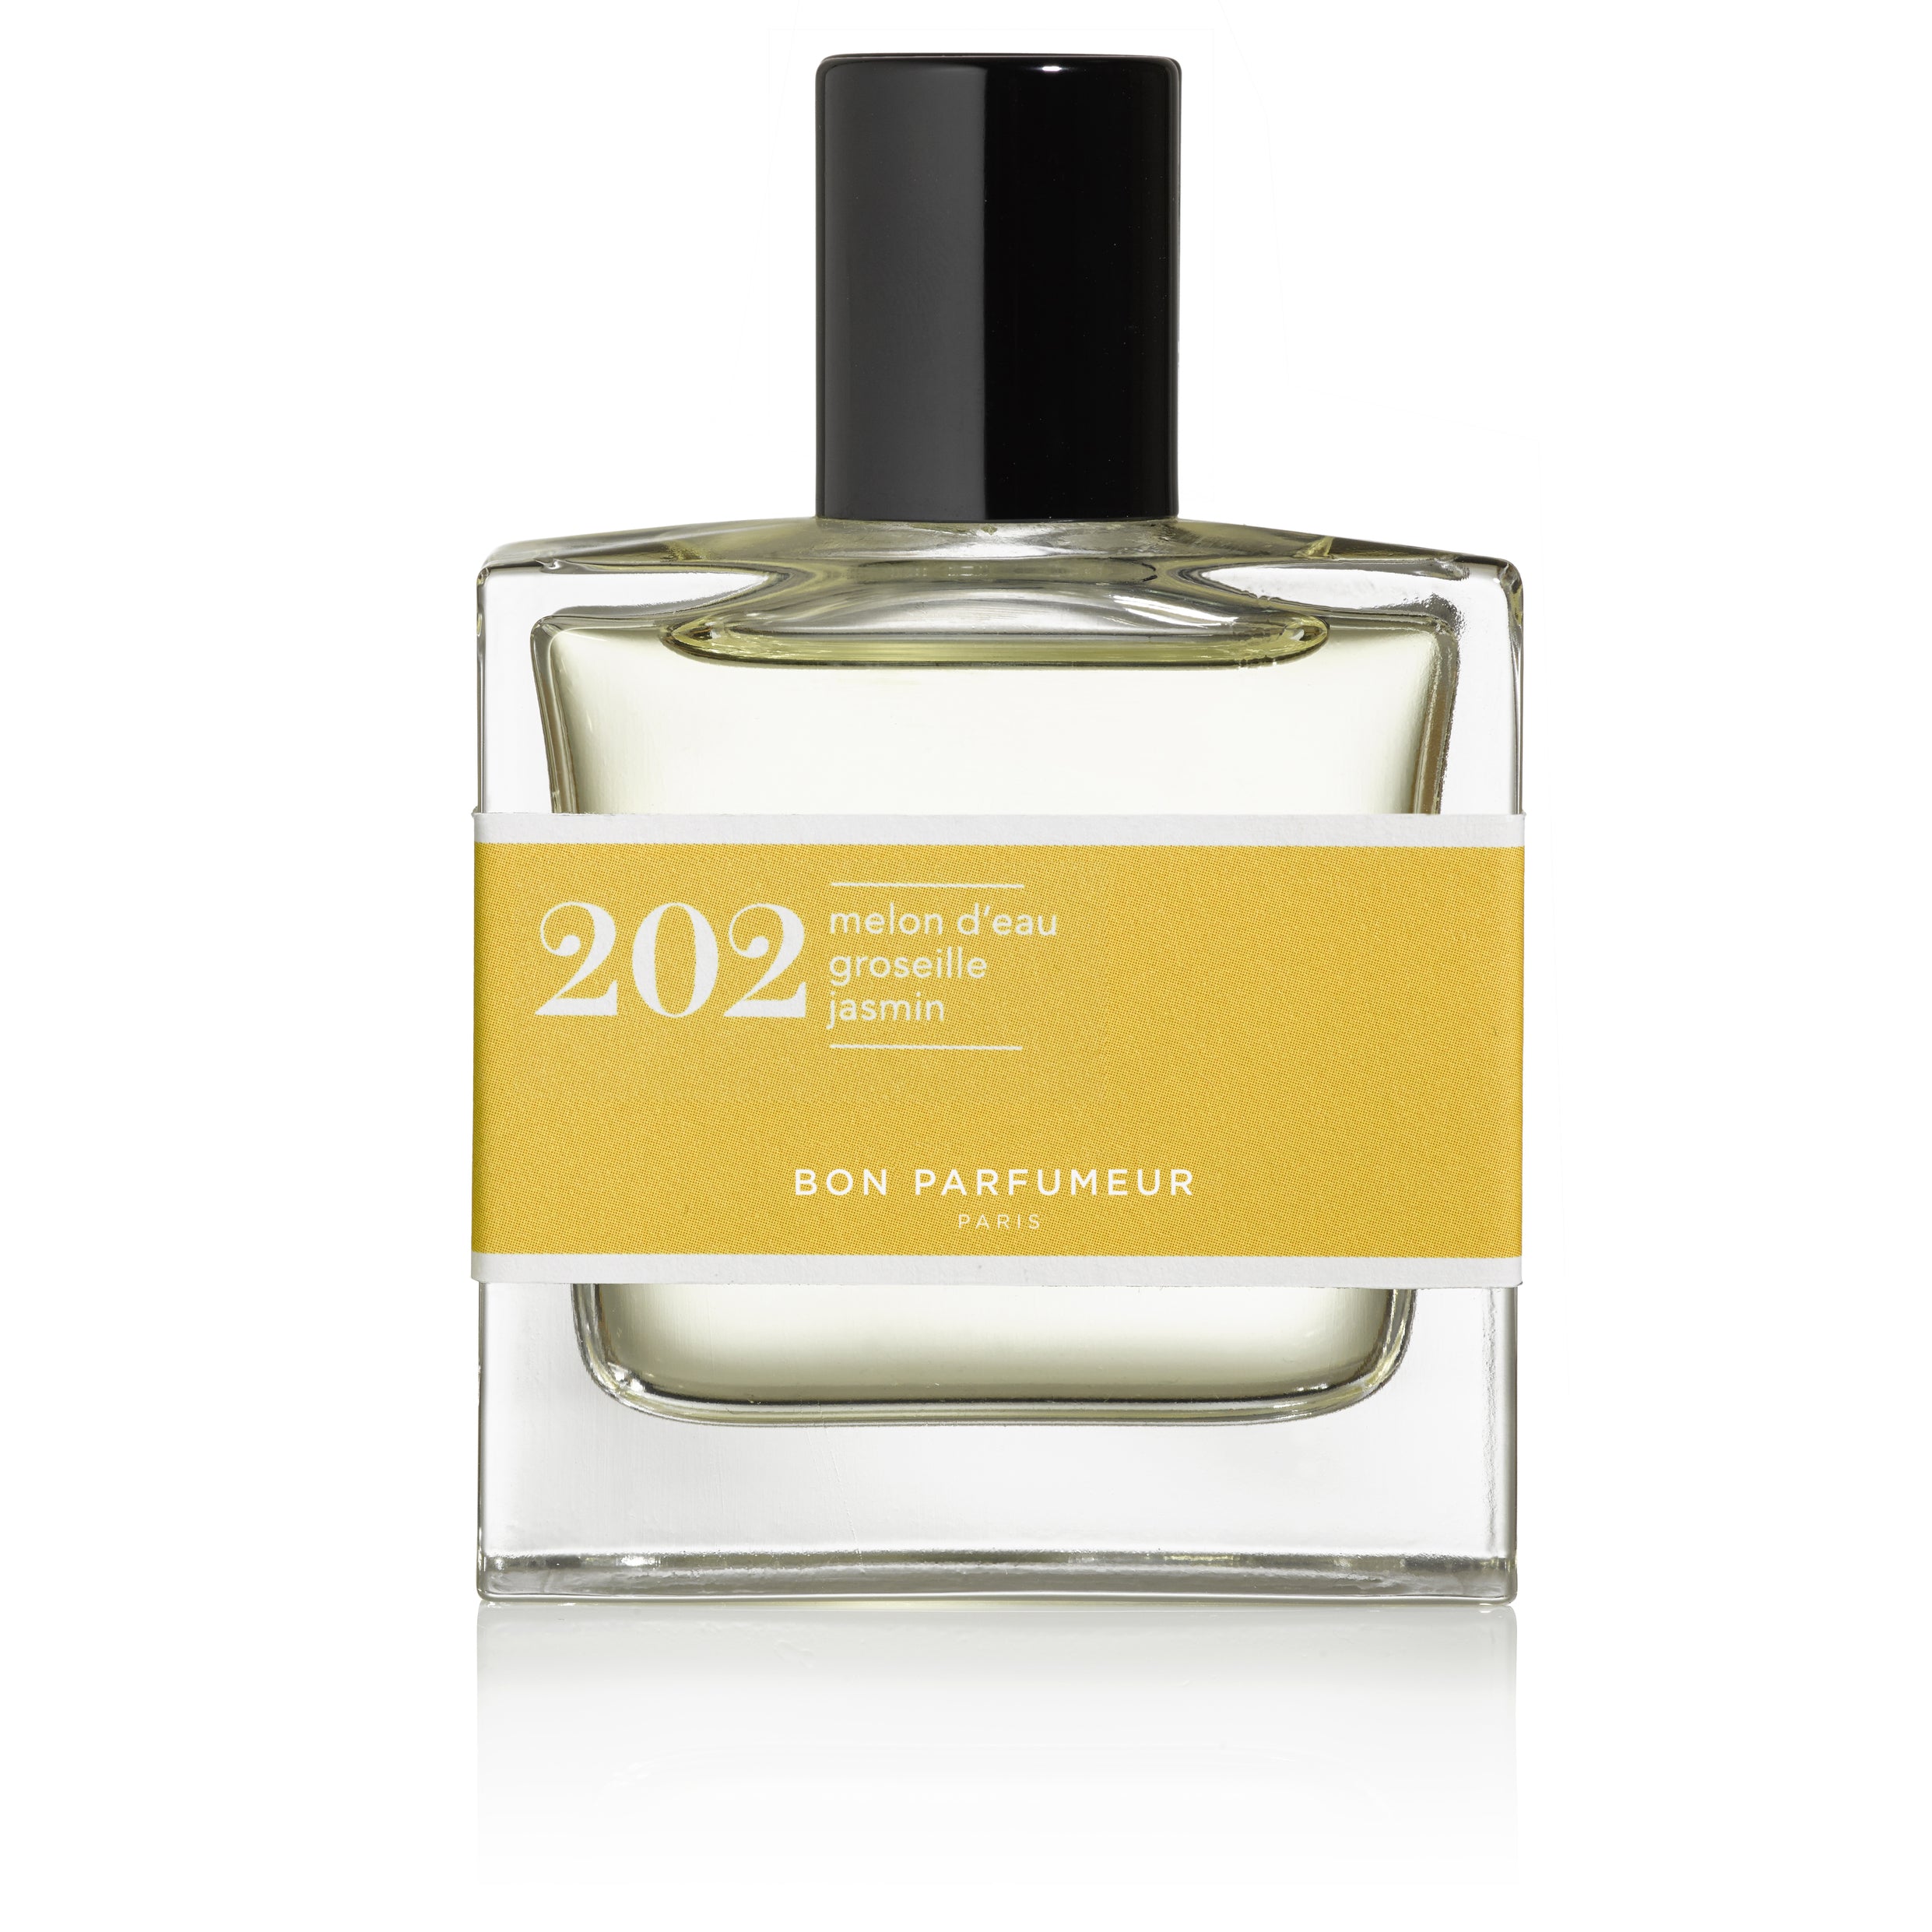 Bon Parfumeur - Les Classiques 202 - Danae Profumeria